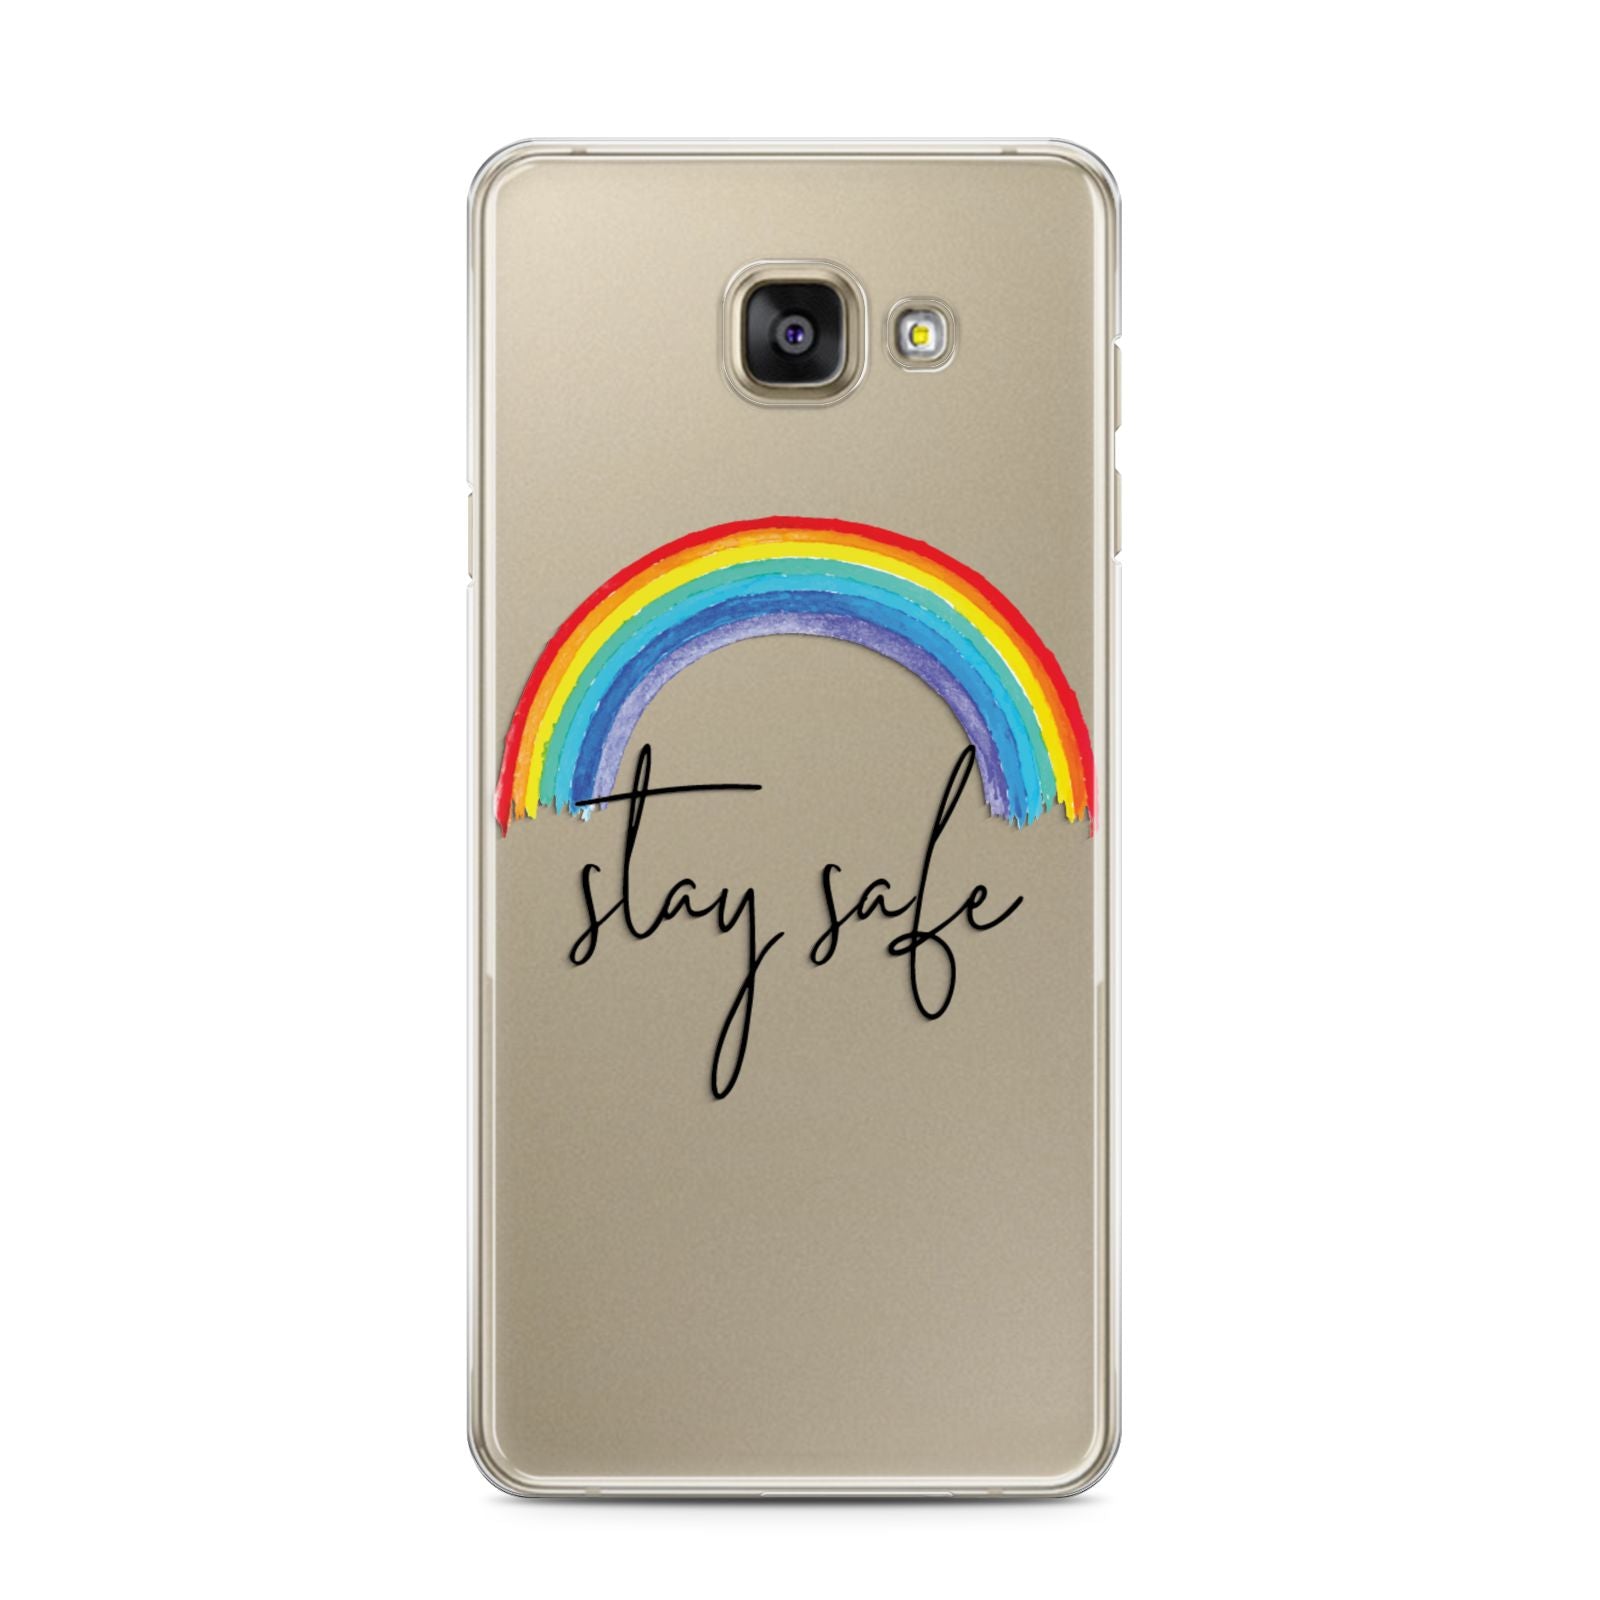 Stay Safe Rainbow Samsung Galaxy A3 2016 Case on gold phone